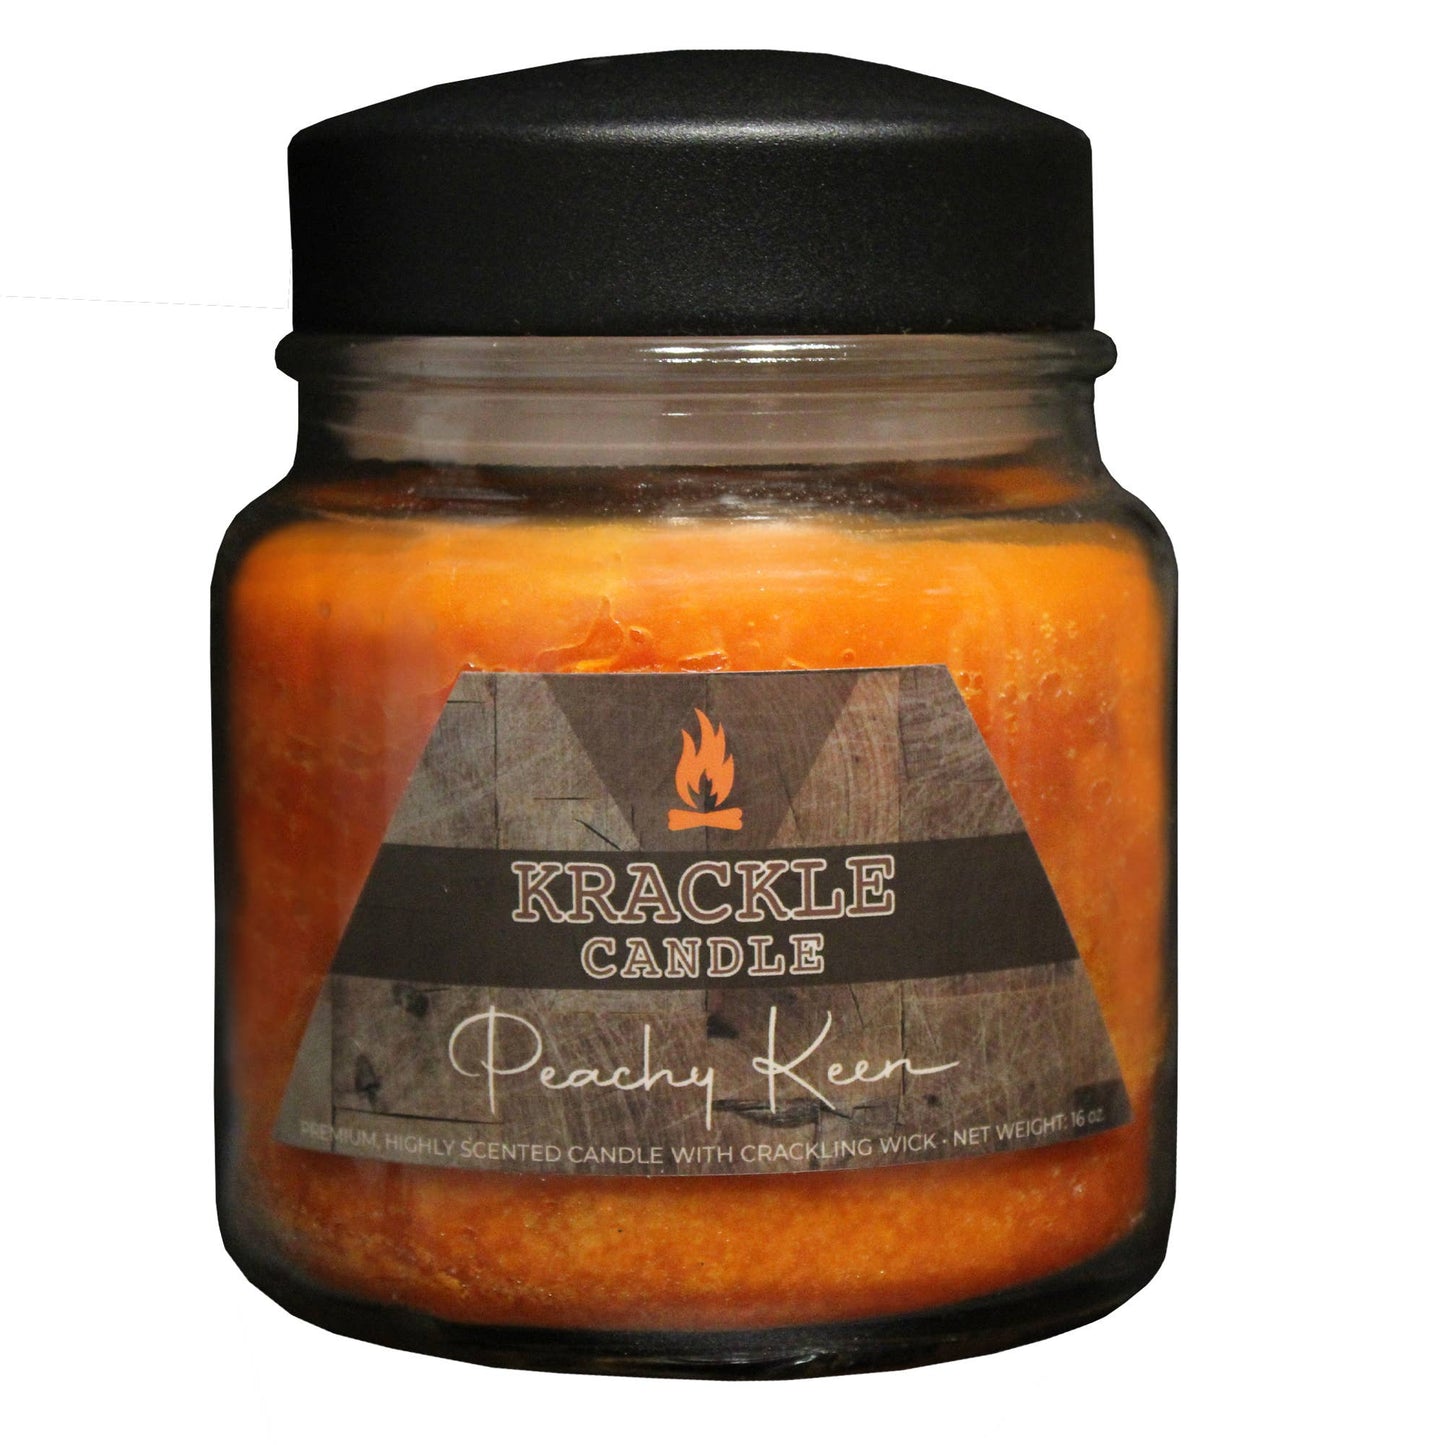 Peachy Keen Krackle Candle